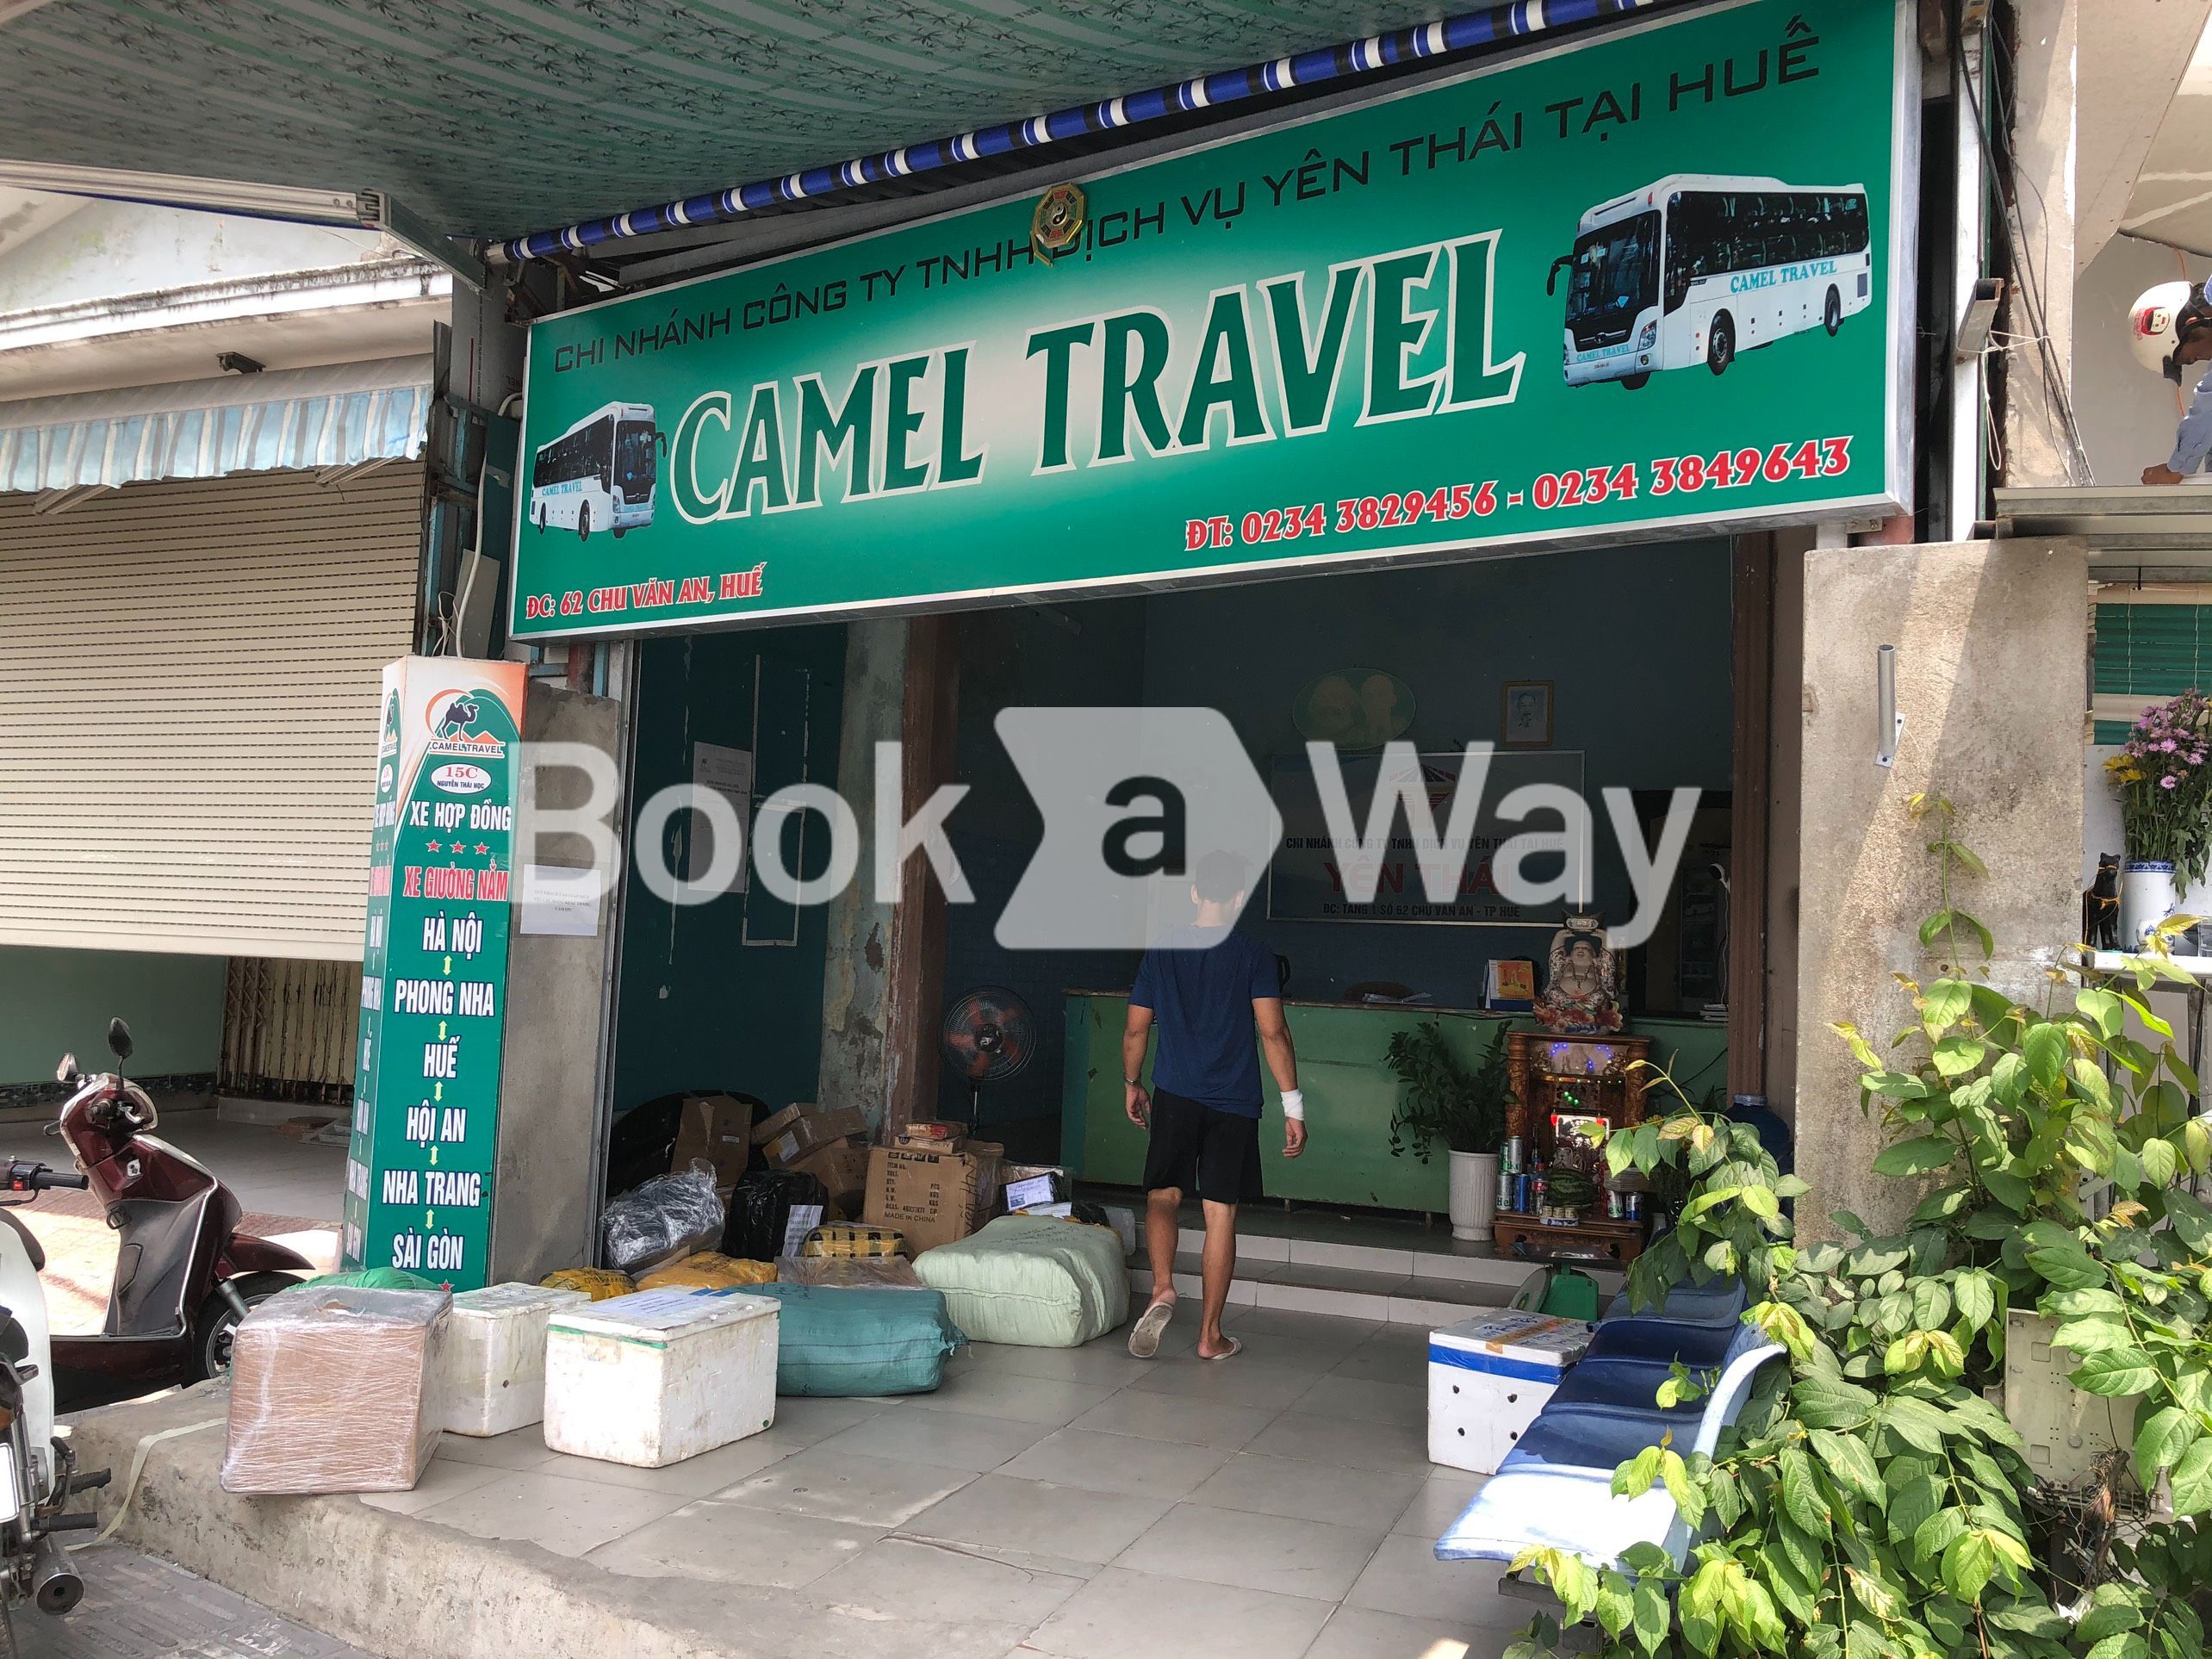 Camel Travel office Hue